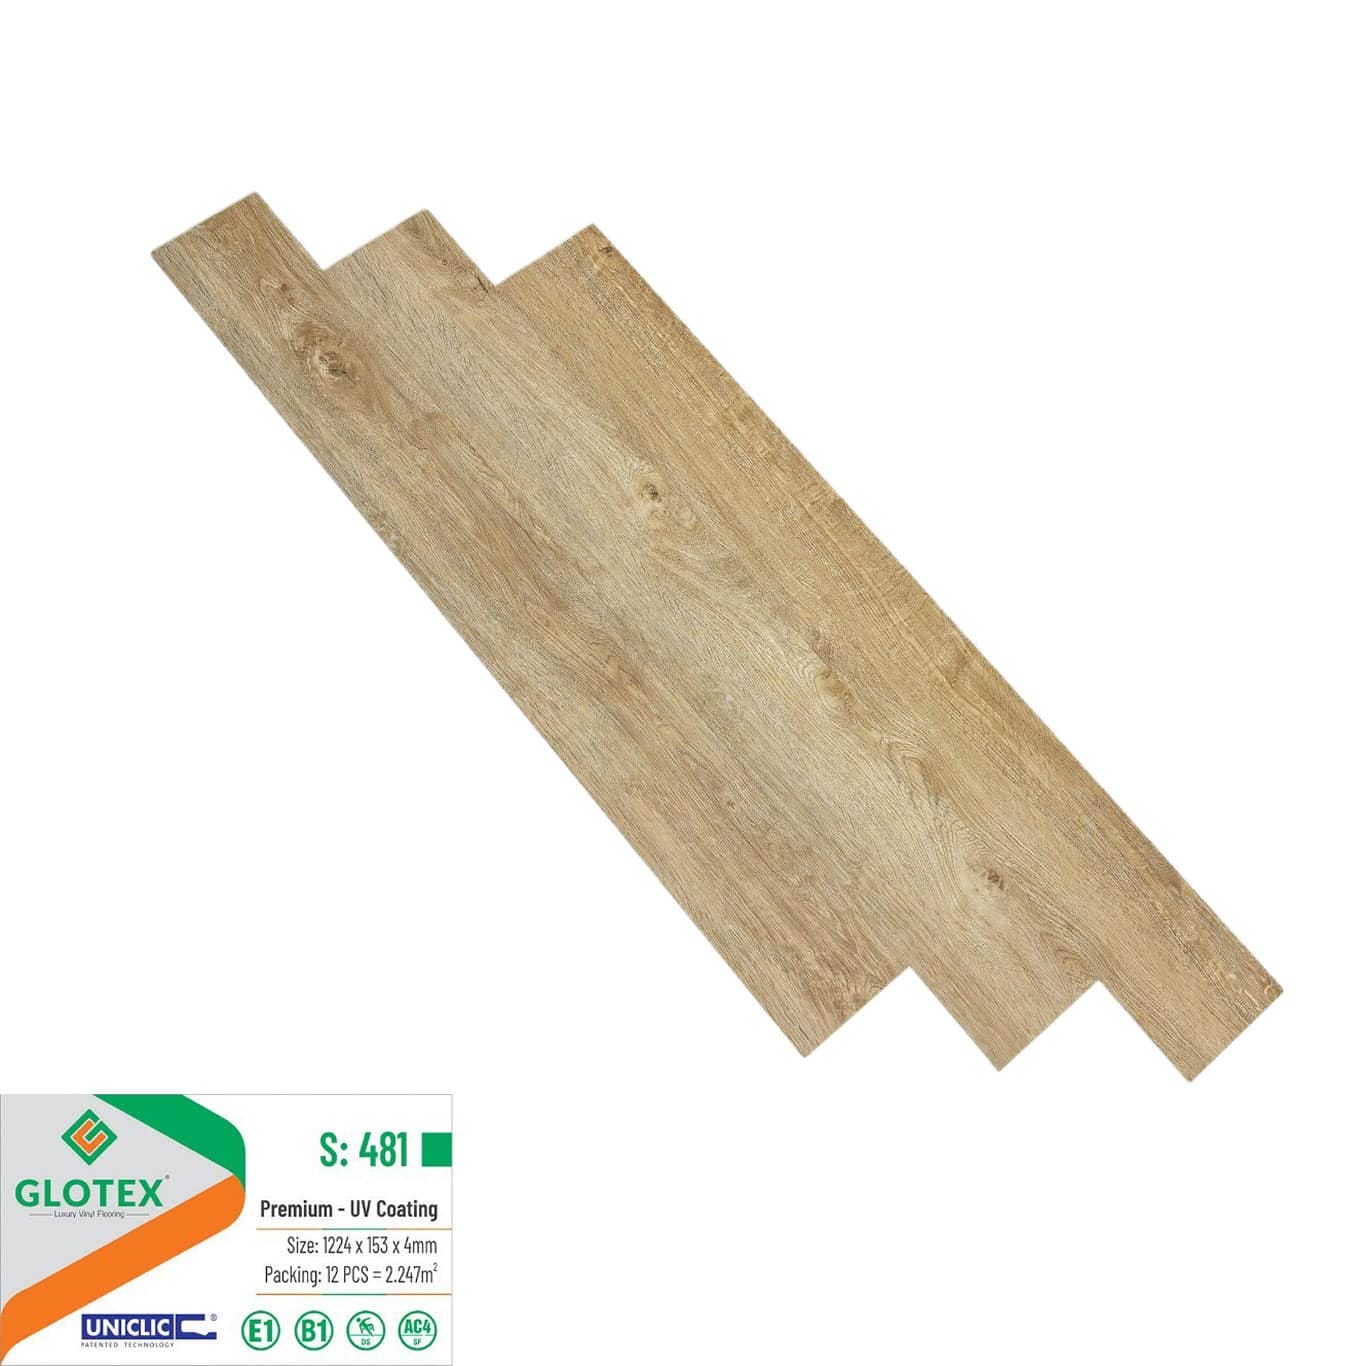 Sàn nhựa giả gỗ Glotex S481